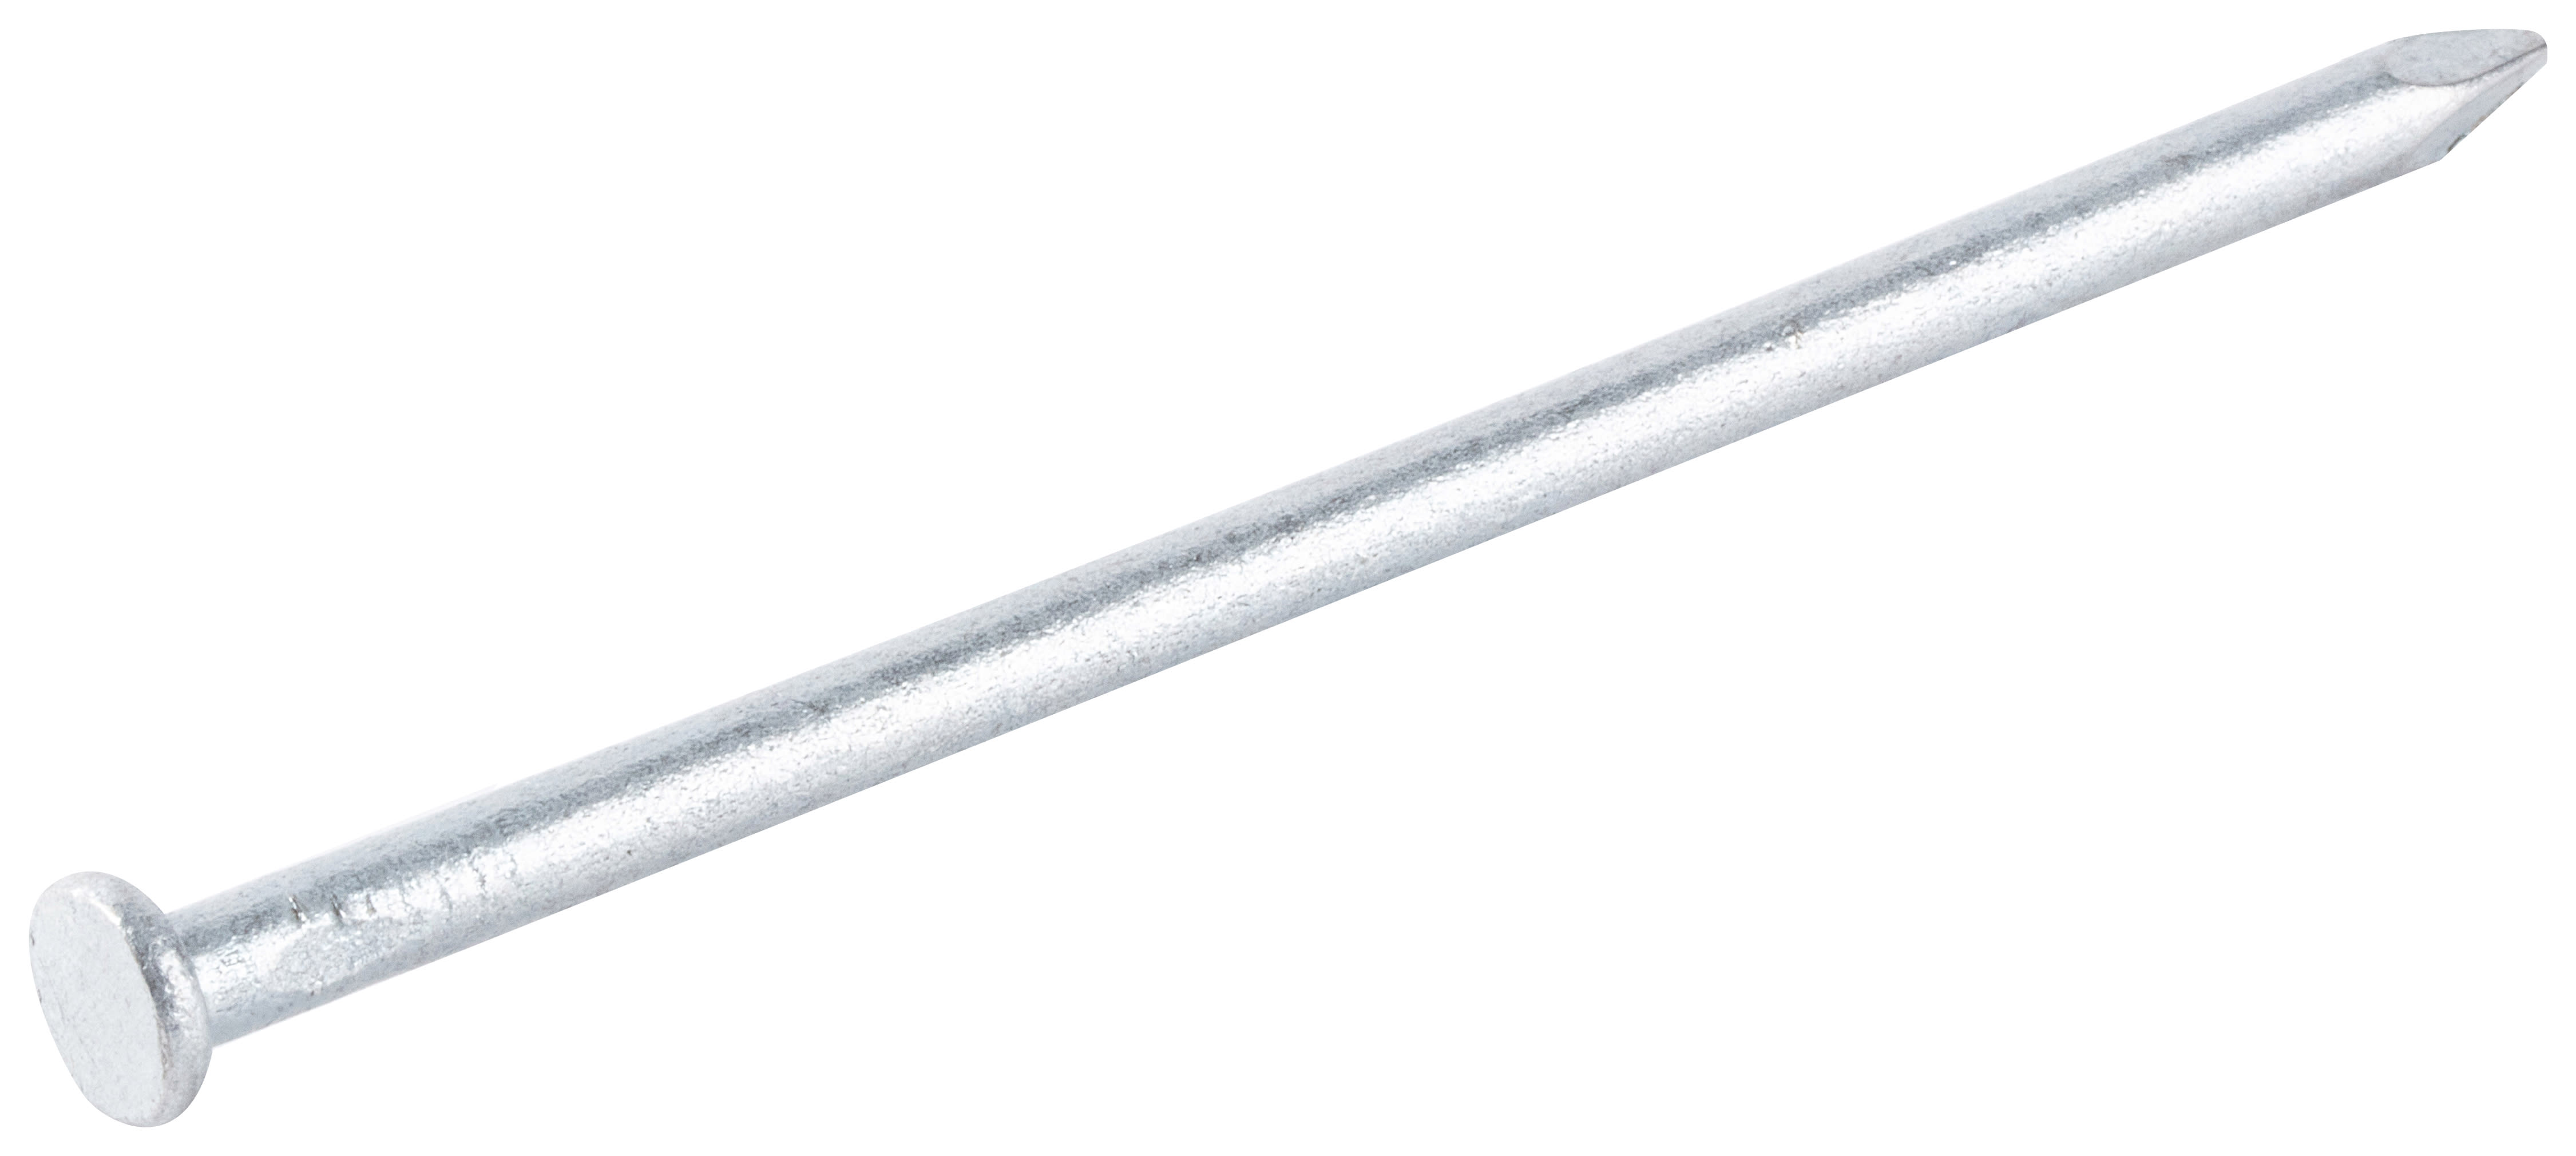 Galvanised Round Wire Nails - 100 x 4.5mm